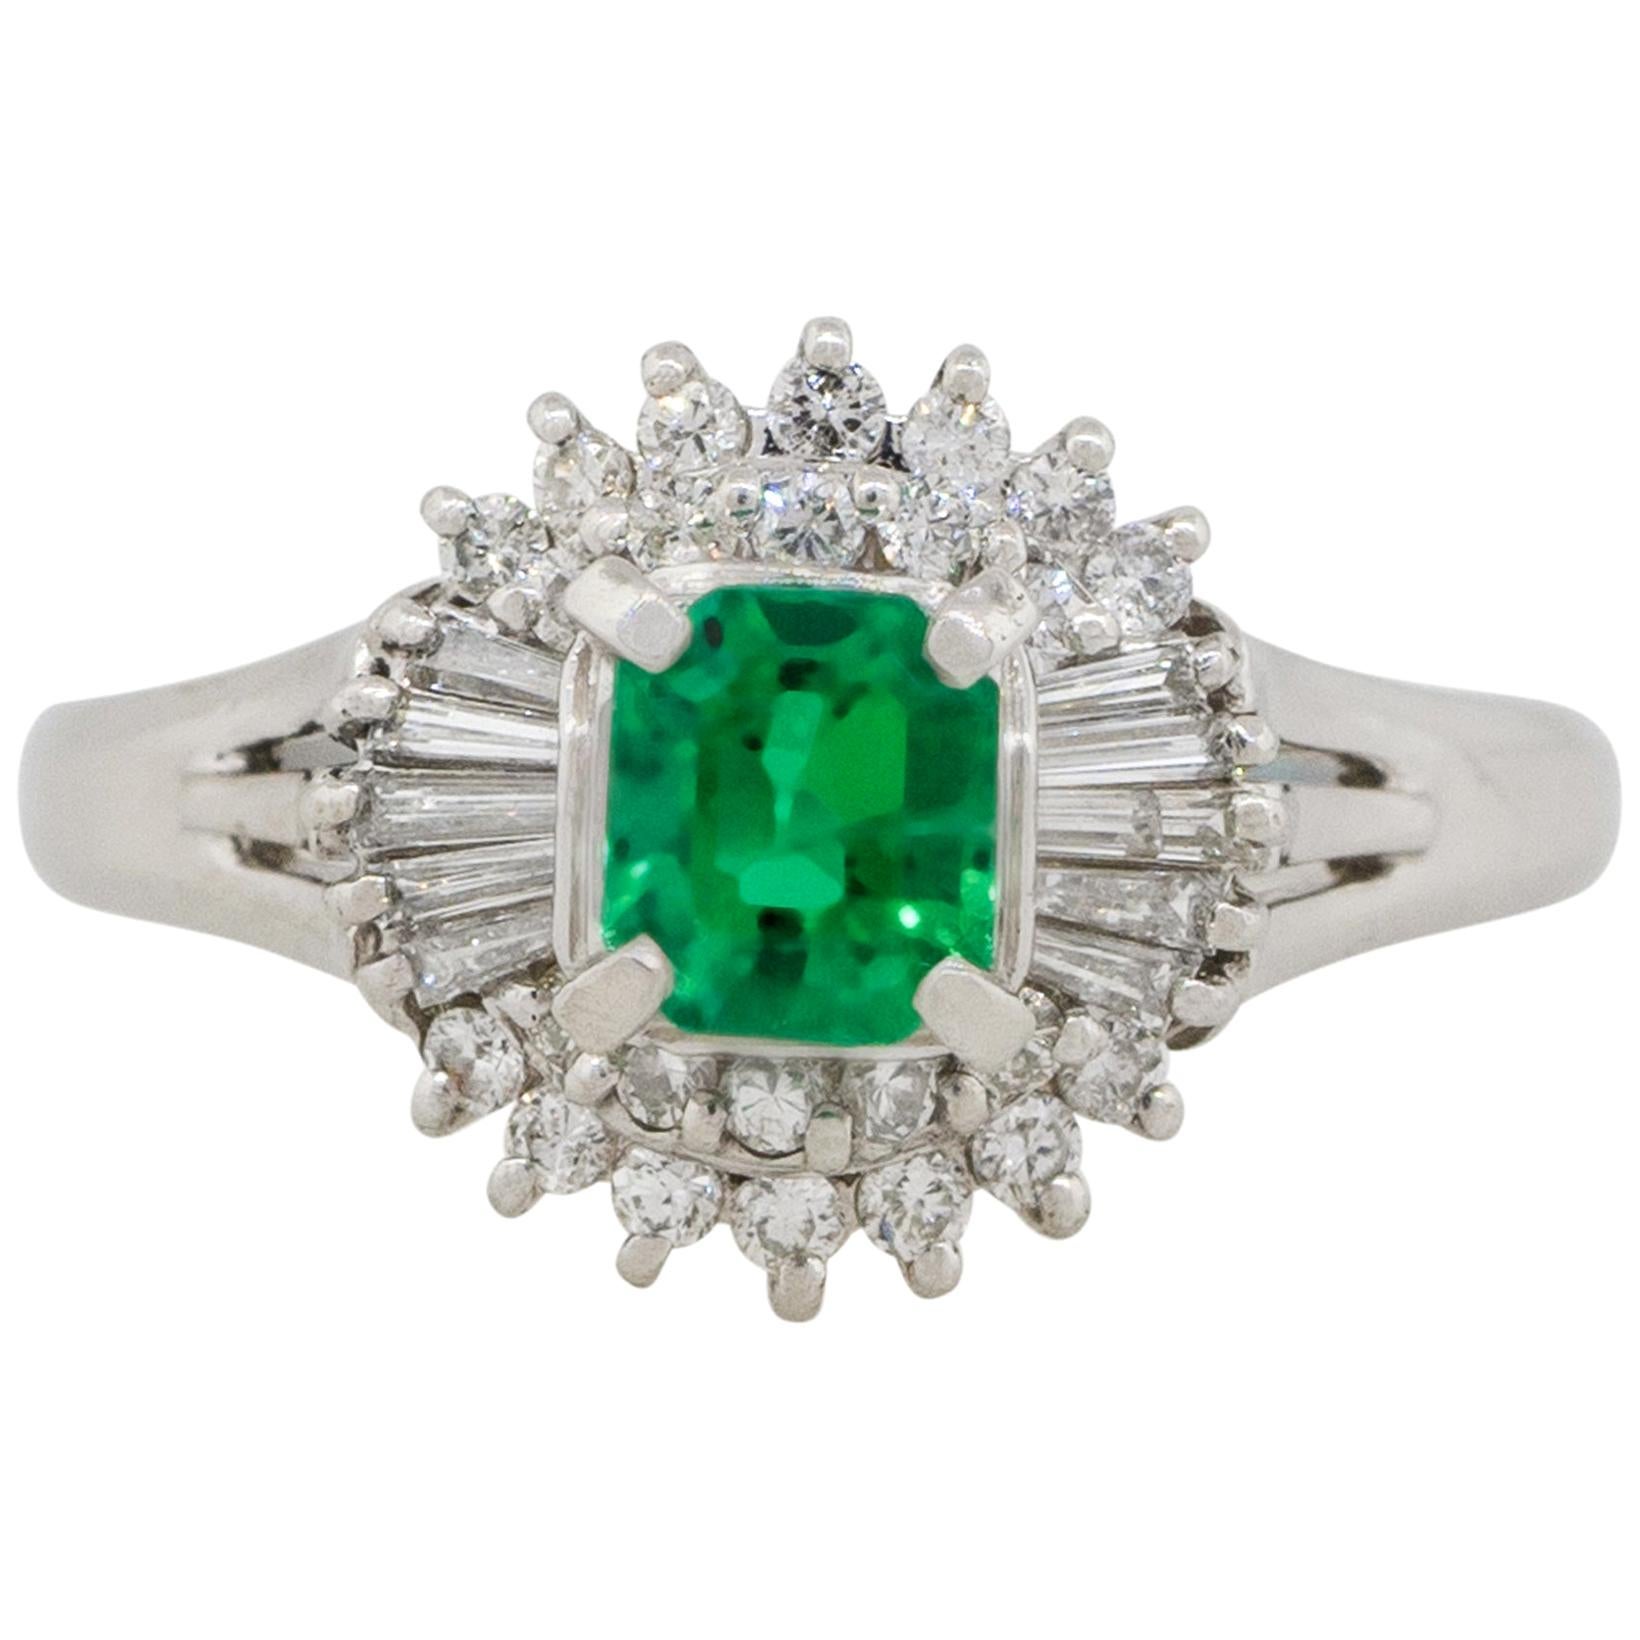 0.47 Carat Emerald Gemstone Center Diamond Cocktail Ring Platinum in Stock